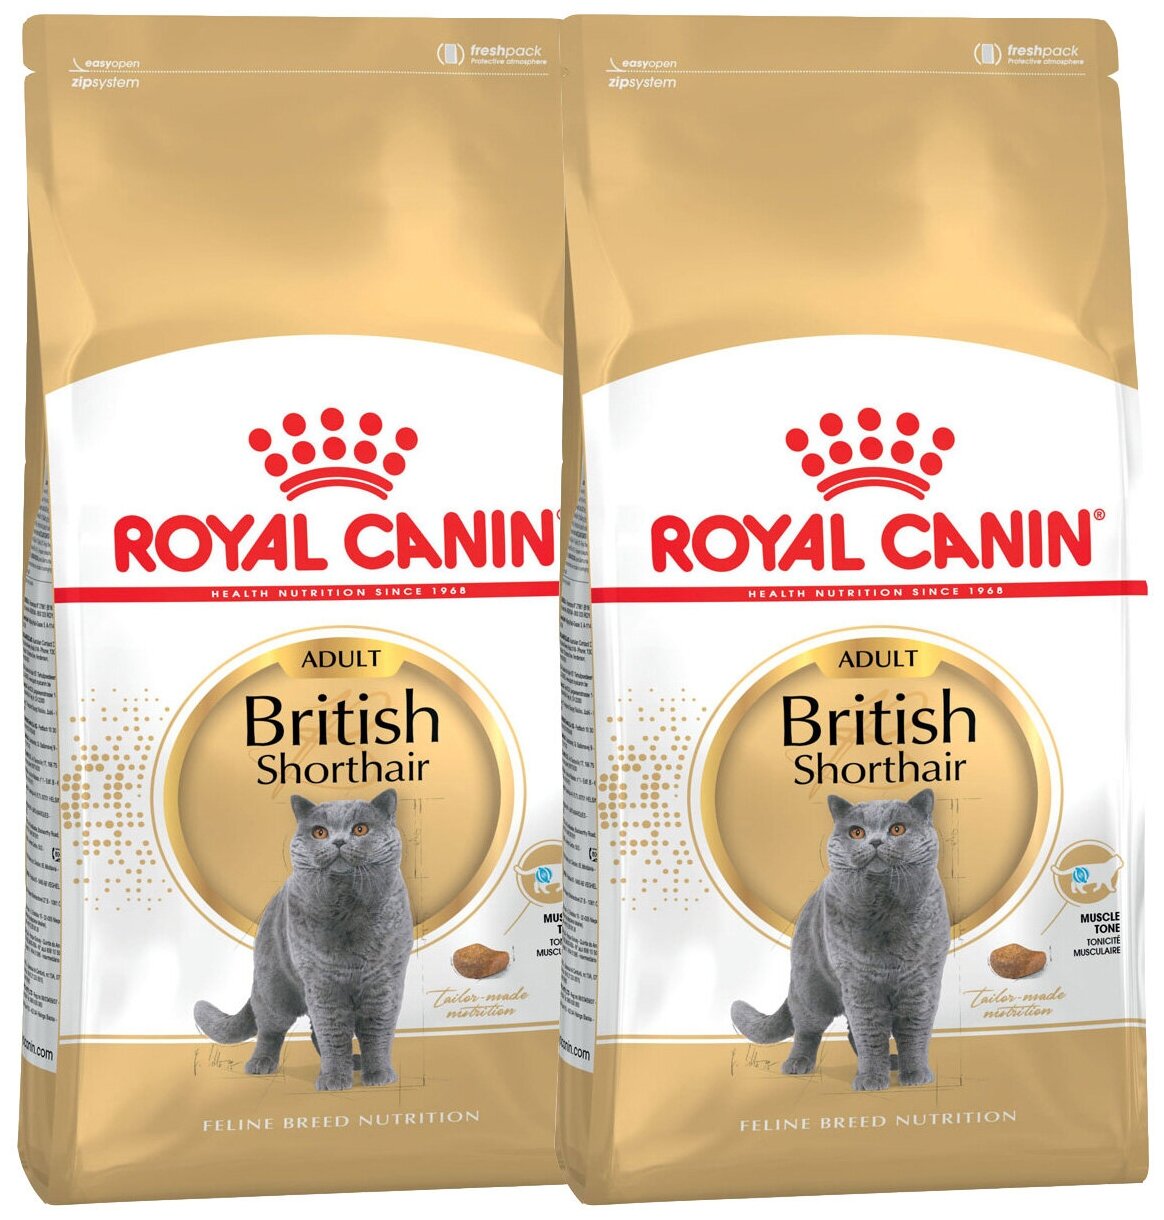 ROYAL CANIN BRITISH SHORTHAIR ADULT для взрослых британских короткошерстных кошек (4 + 4 кг)